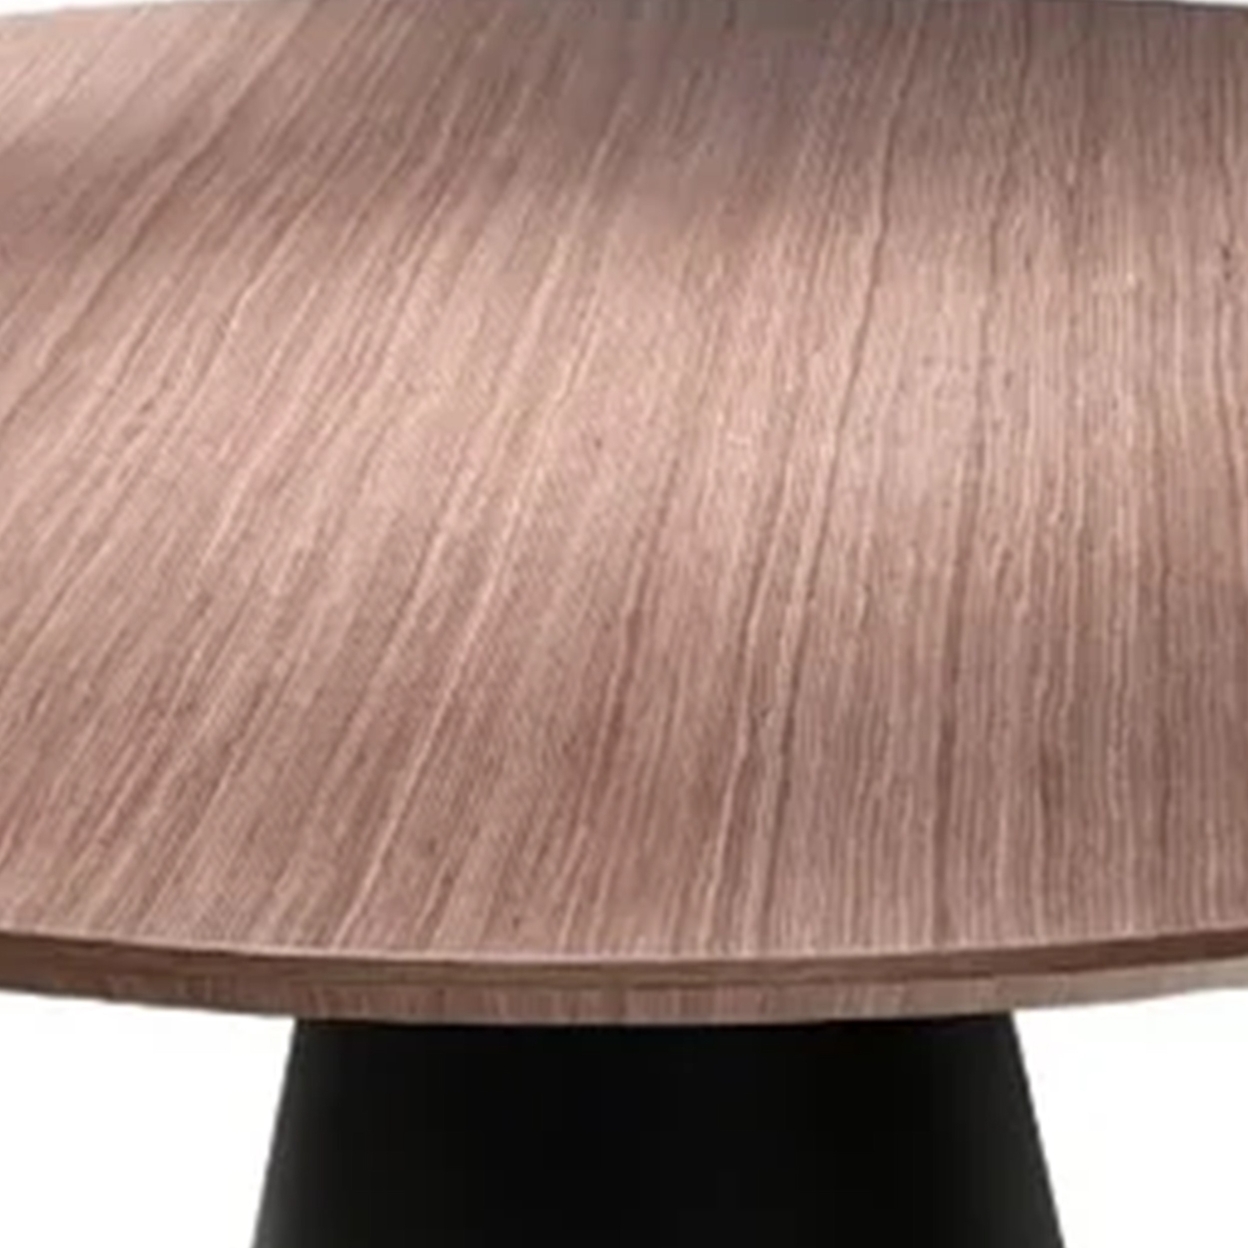 Nasa 49 Inch Modern Dining Table, Walnut Wood Surface, Black Pedestal Base- Saltoro Sherpi